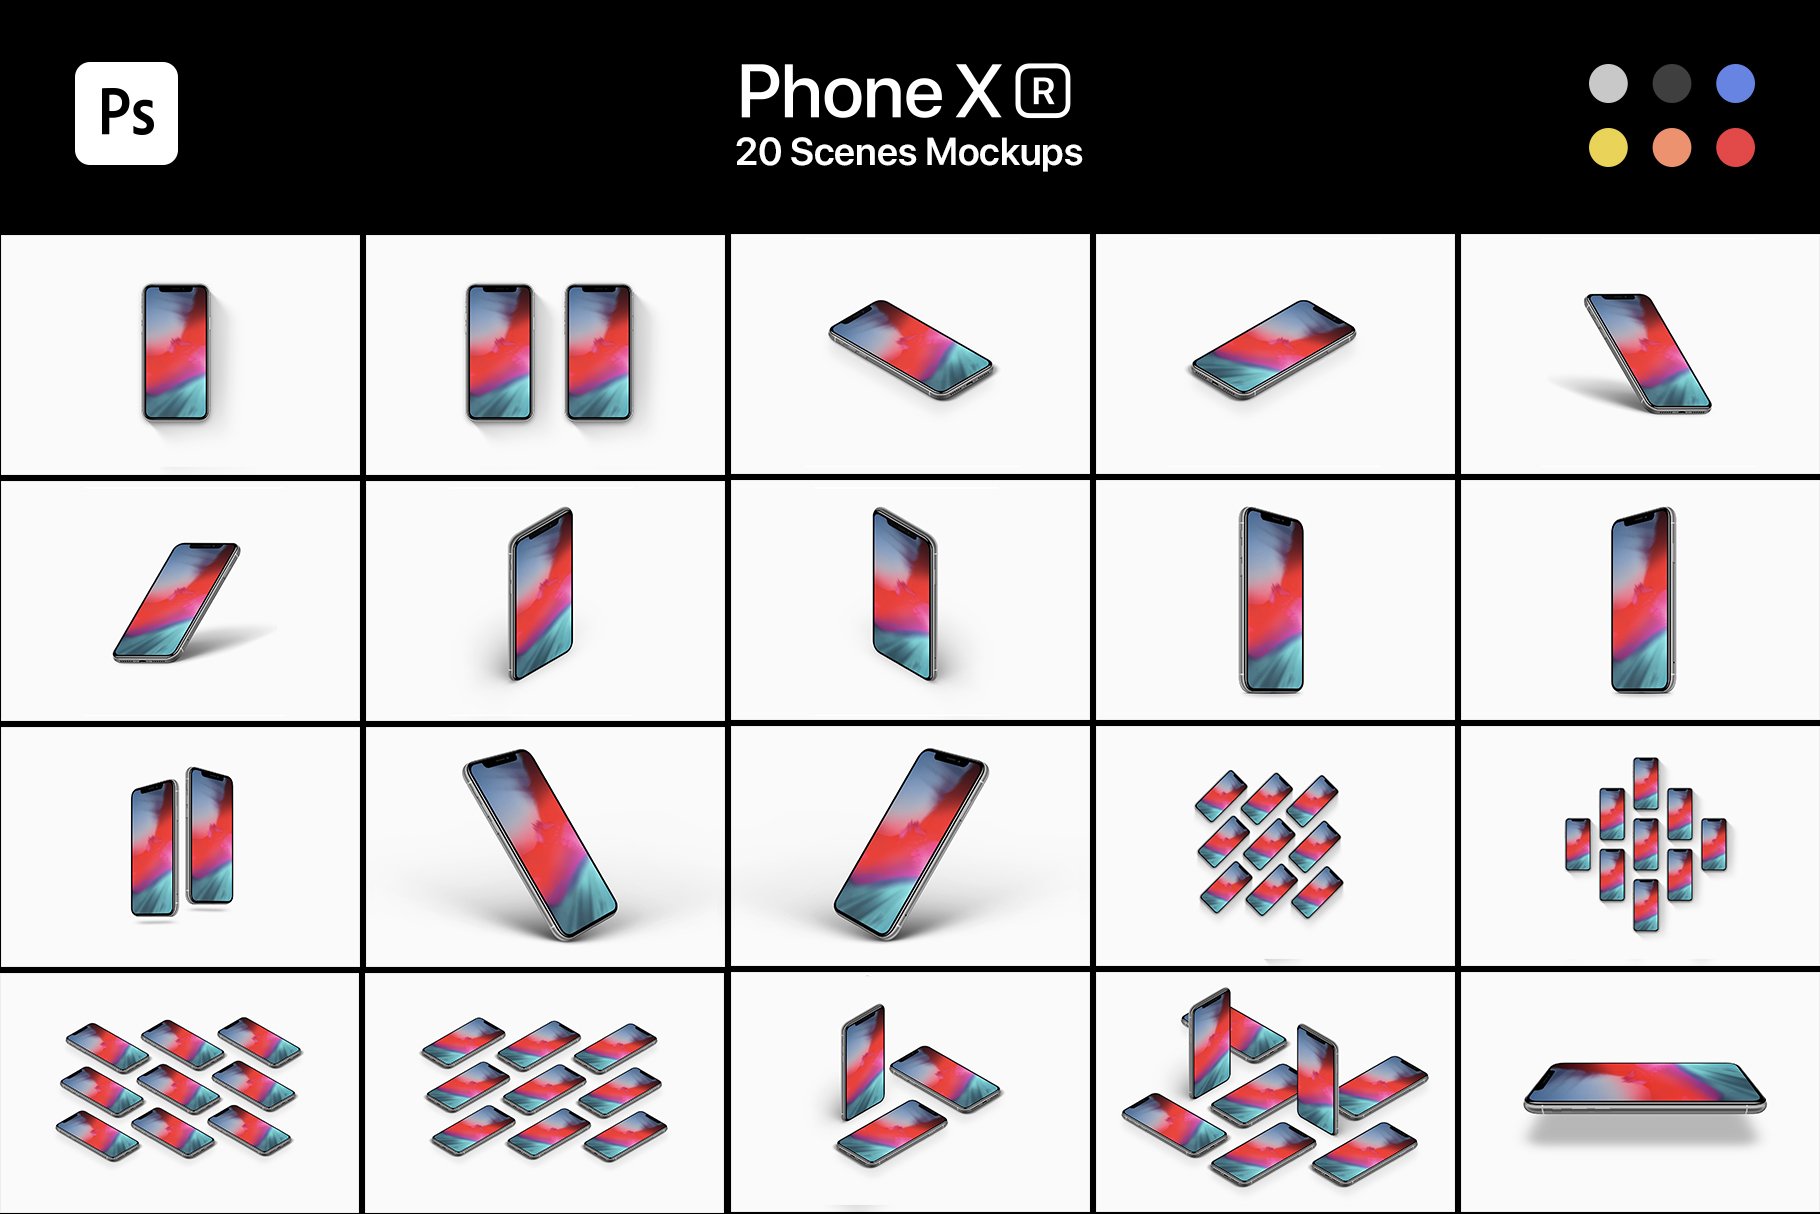 Phone XR 20 Mockups Scenes 5K - PSD preview image.